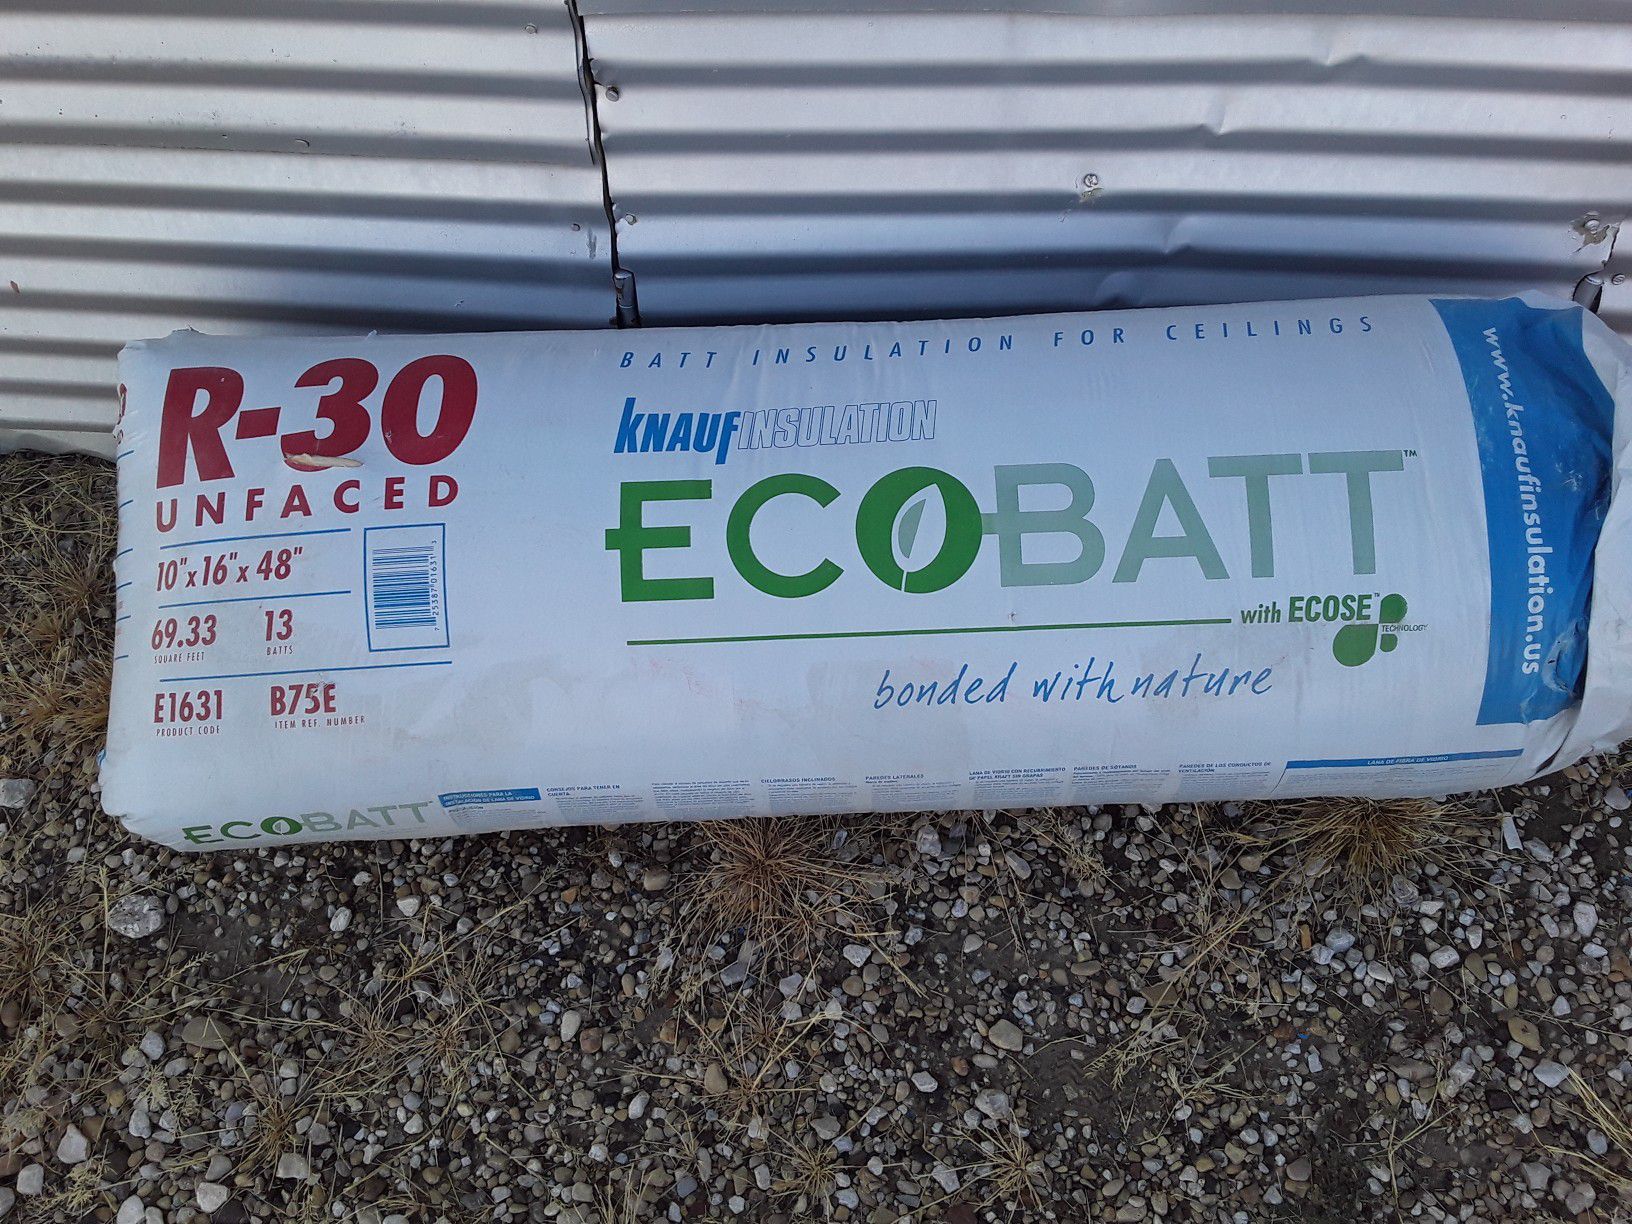 EcoBatt insulation